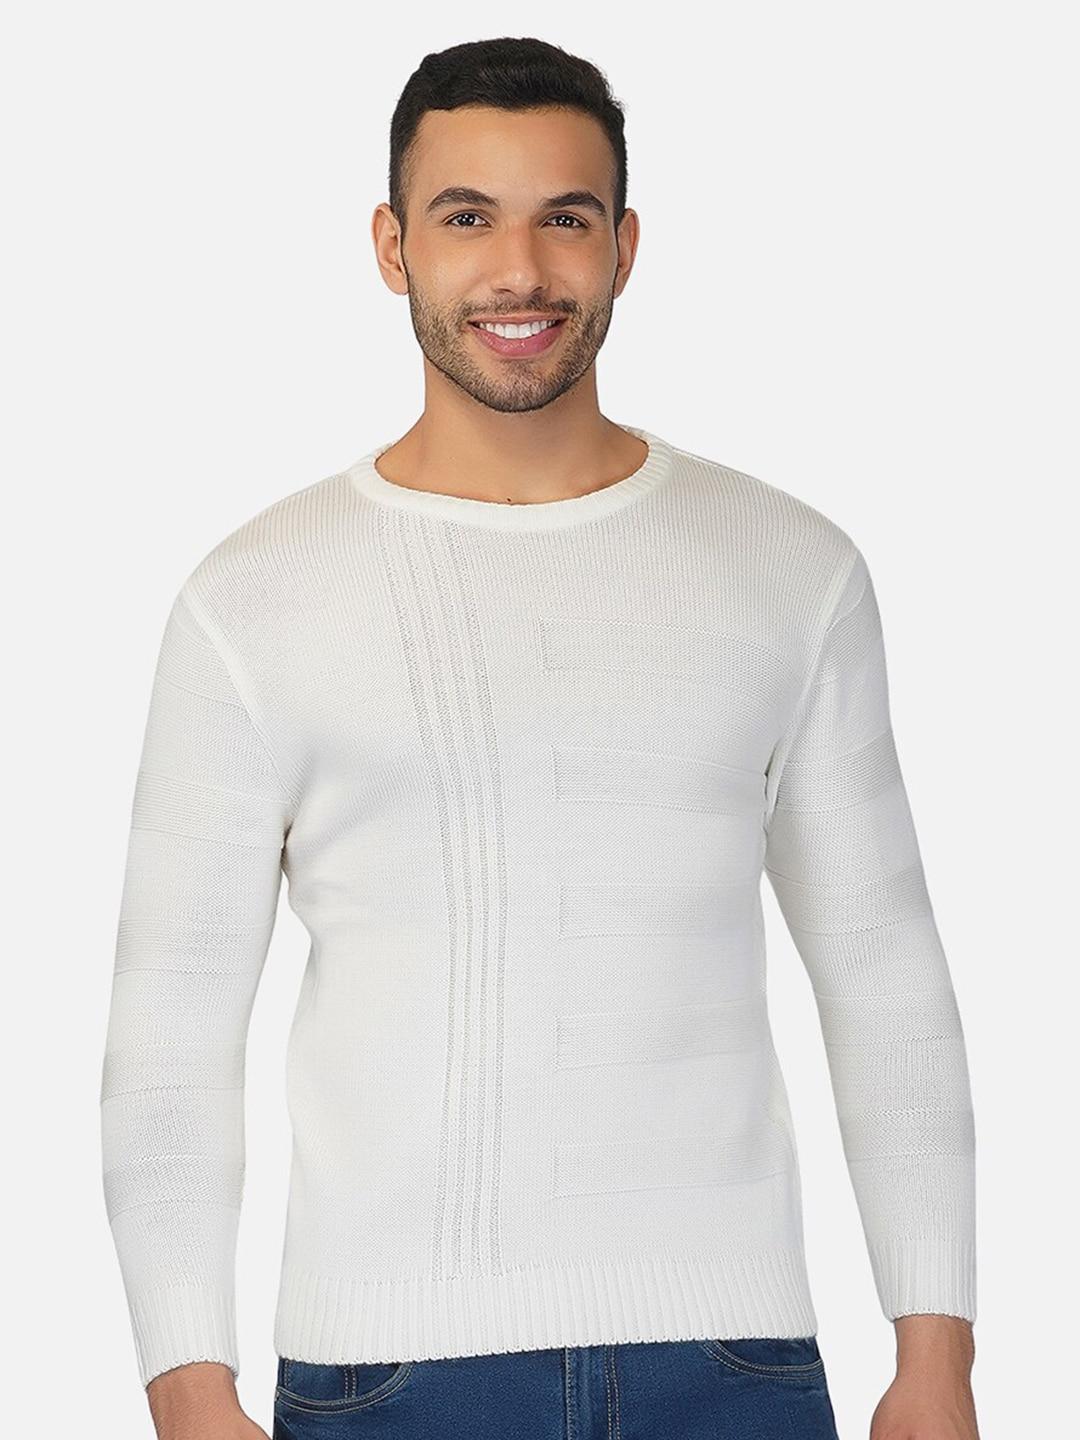 joe-hazel-men-white-pullover